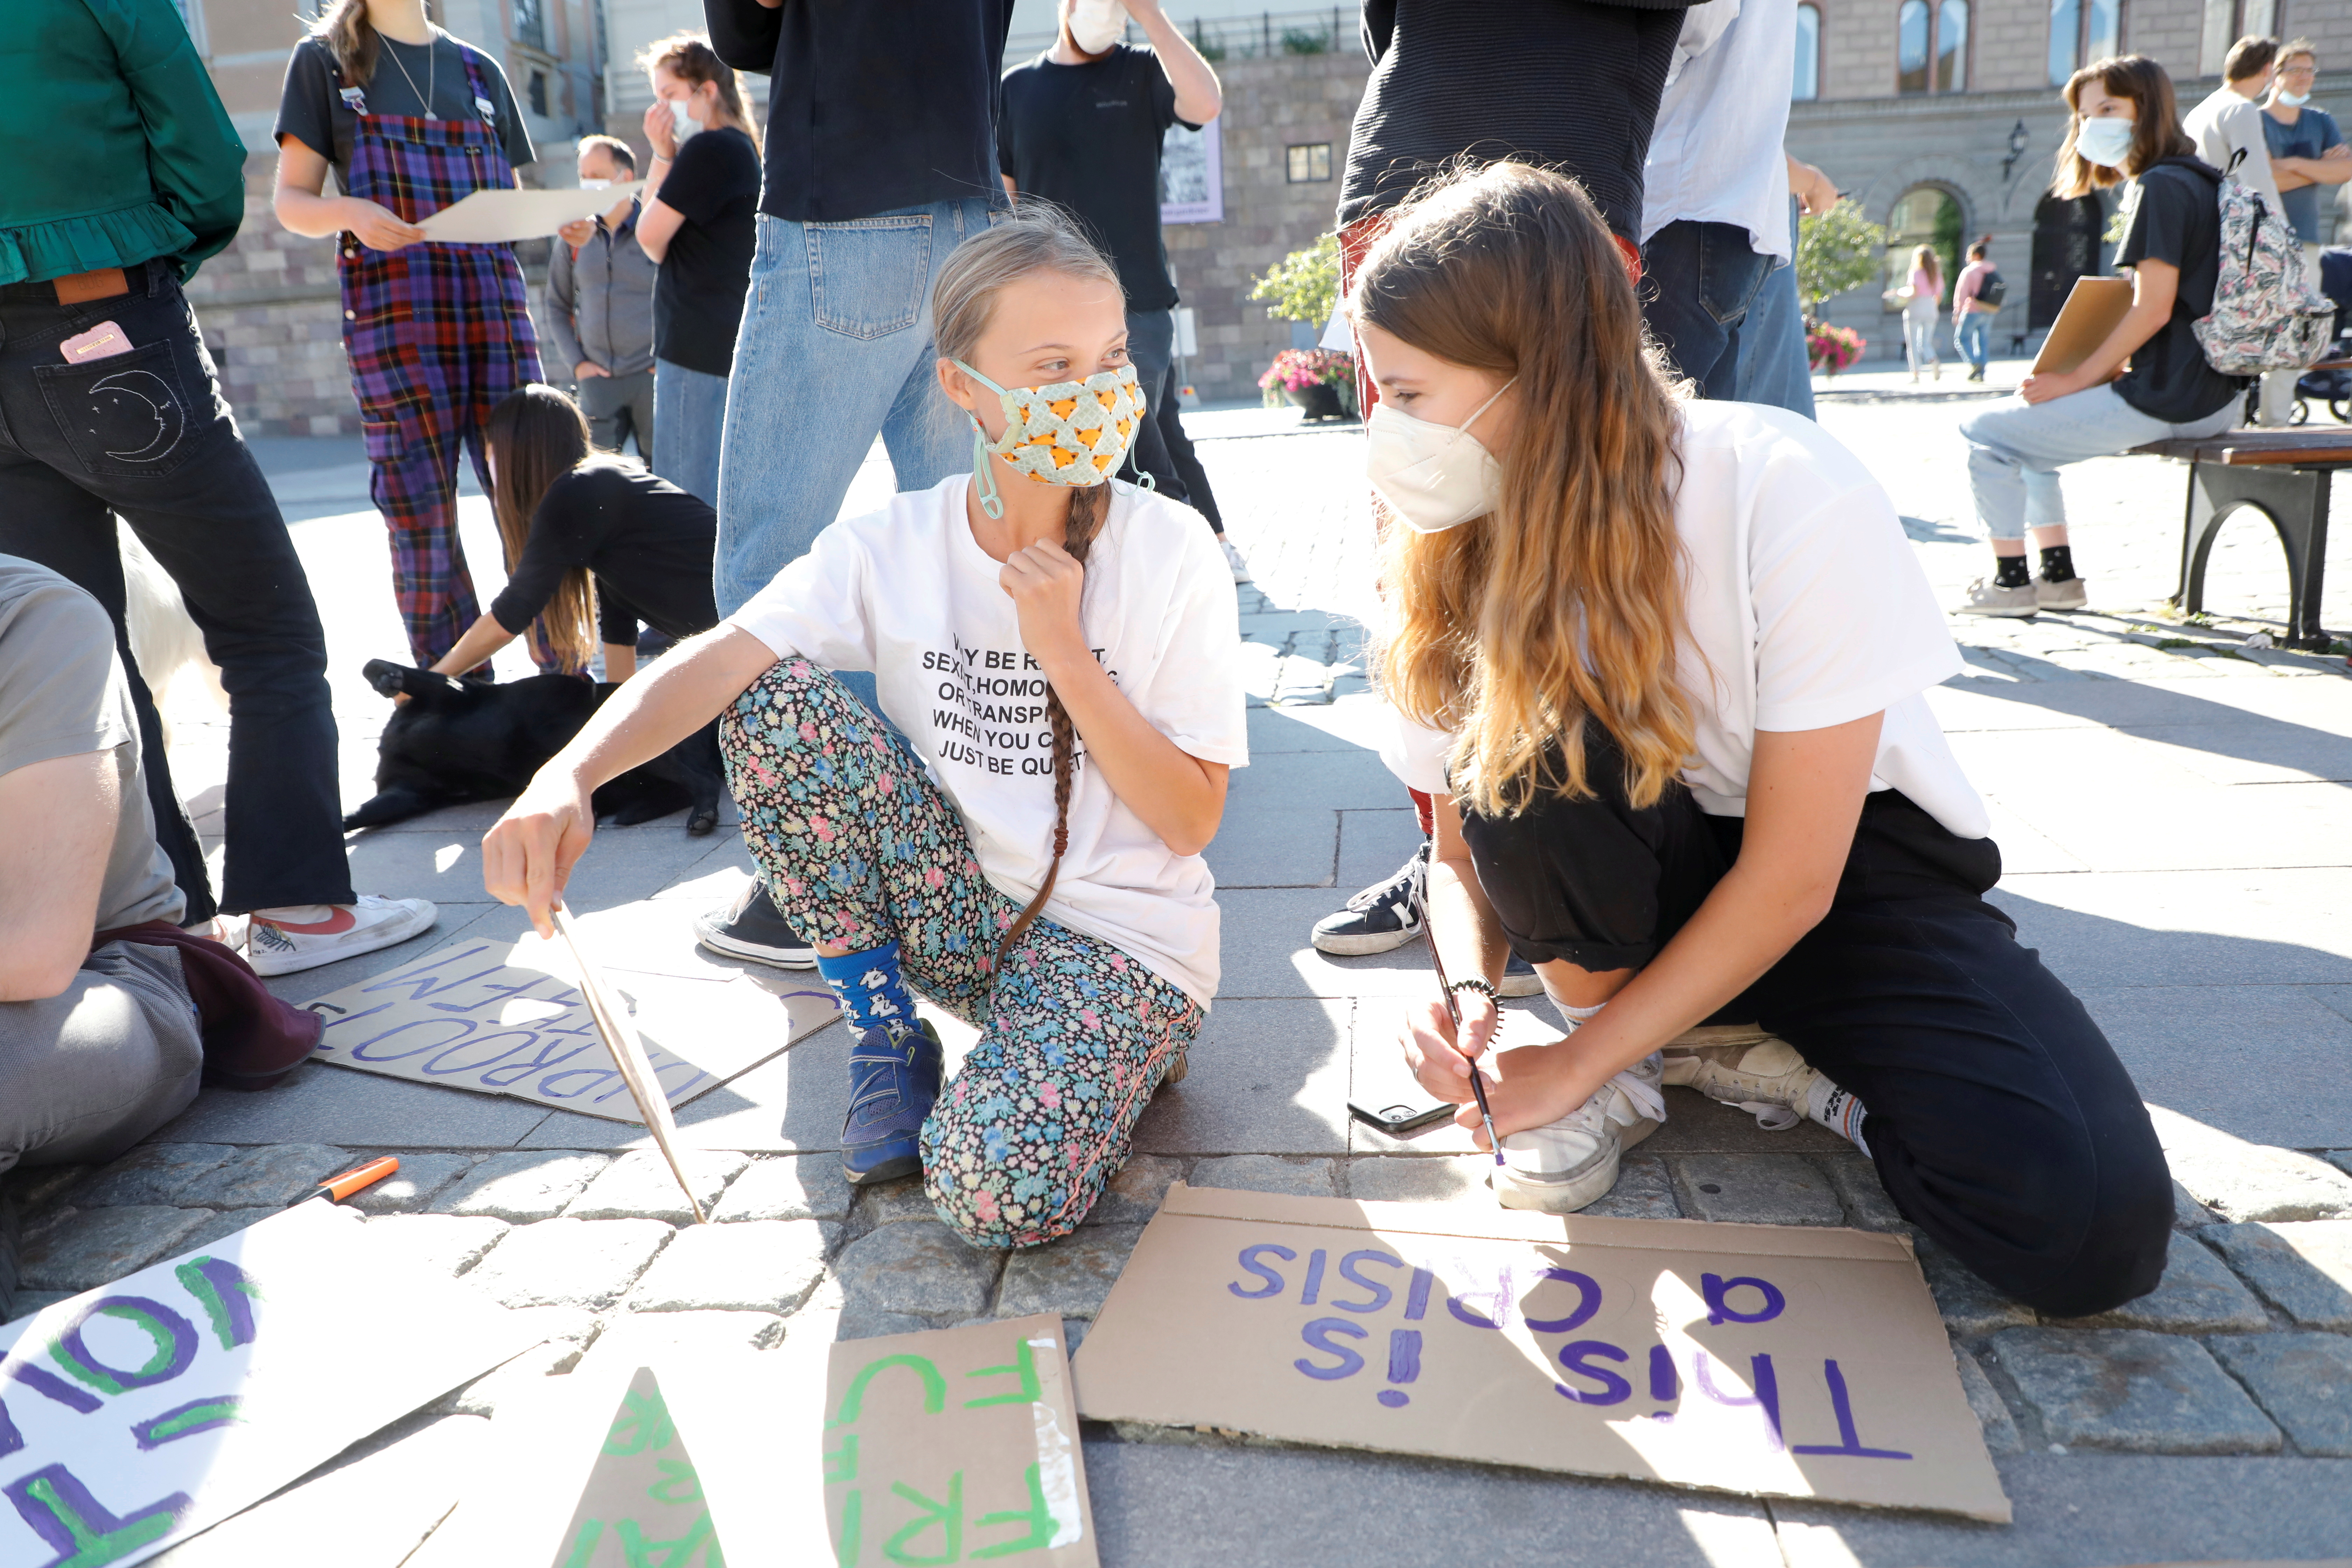 Greta Thunberg and Luisa Neubauer protest outside the Swedish Parliament